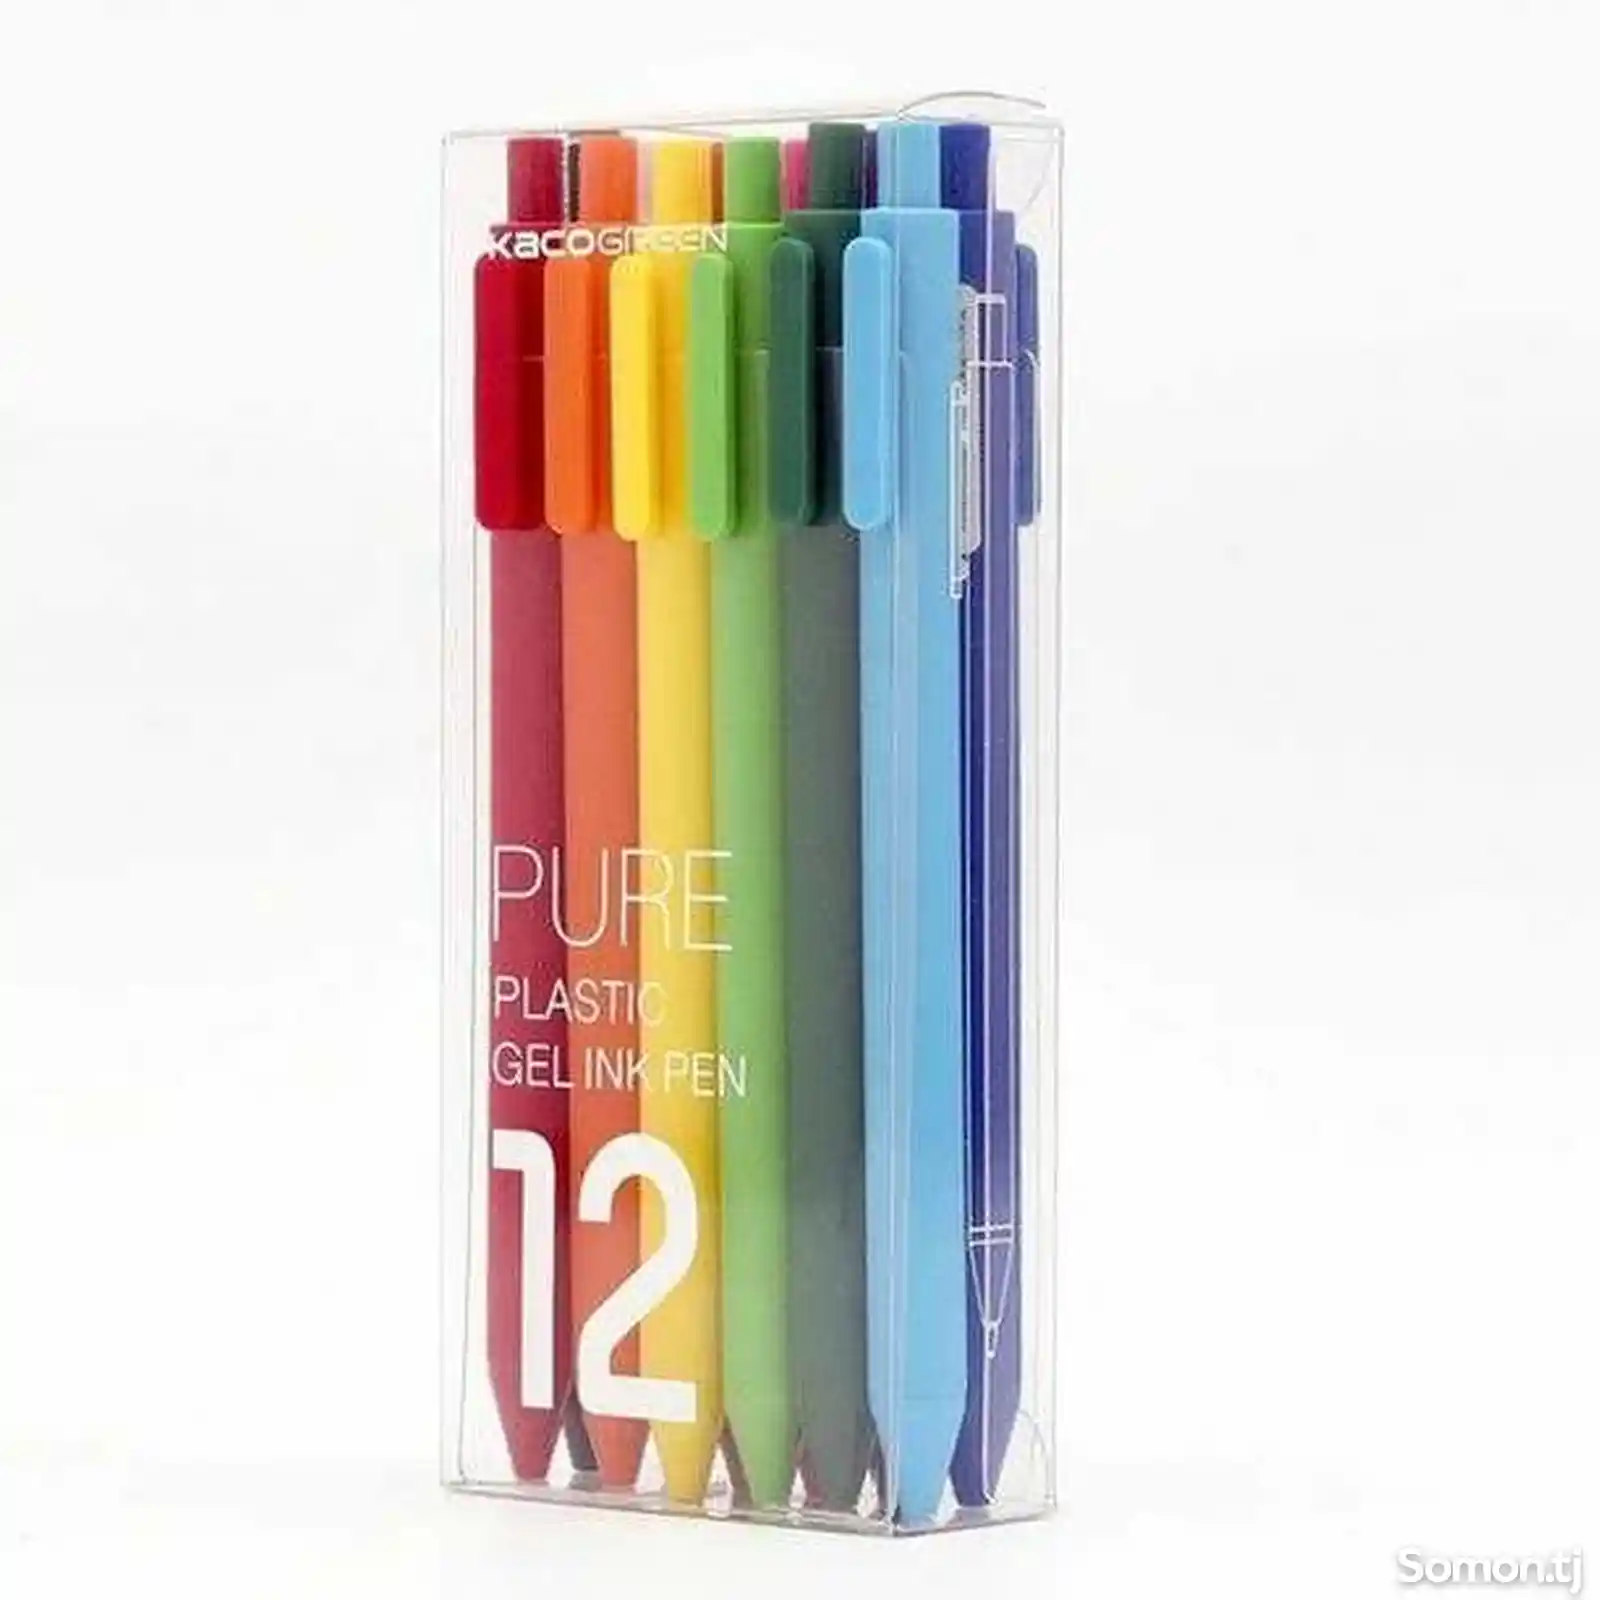 Kaco Pure Plastic Gelic Pen Комплект гелевых ручек 12 штук-5